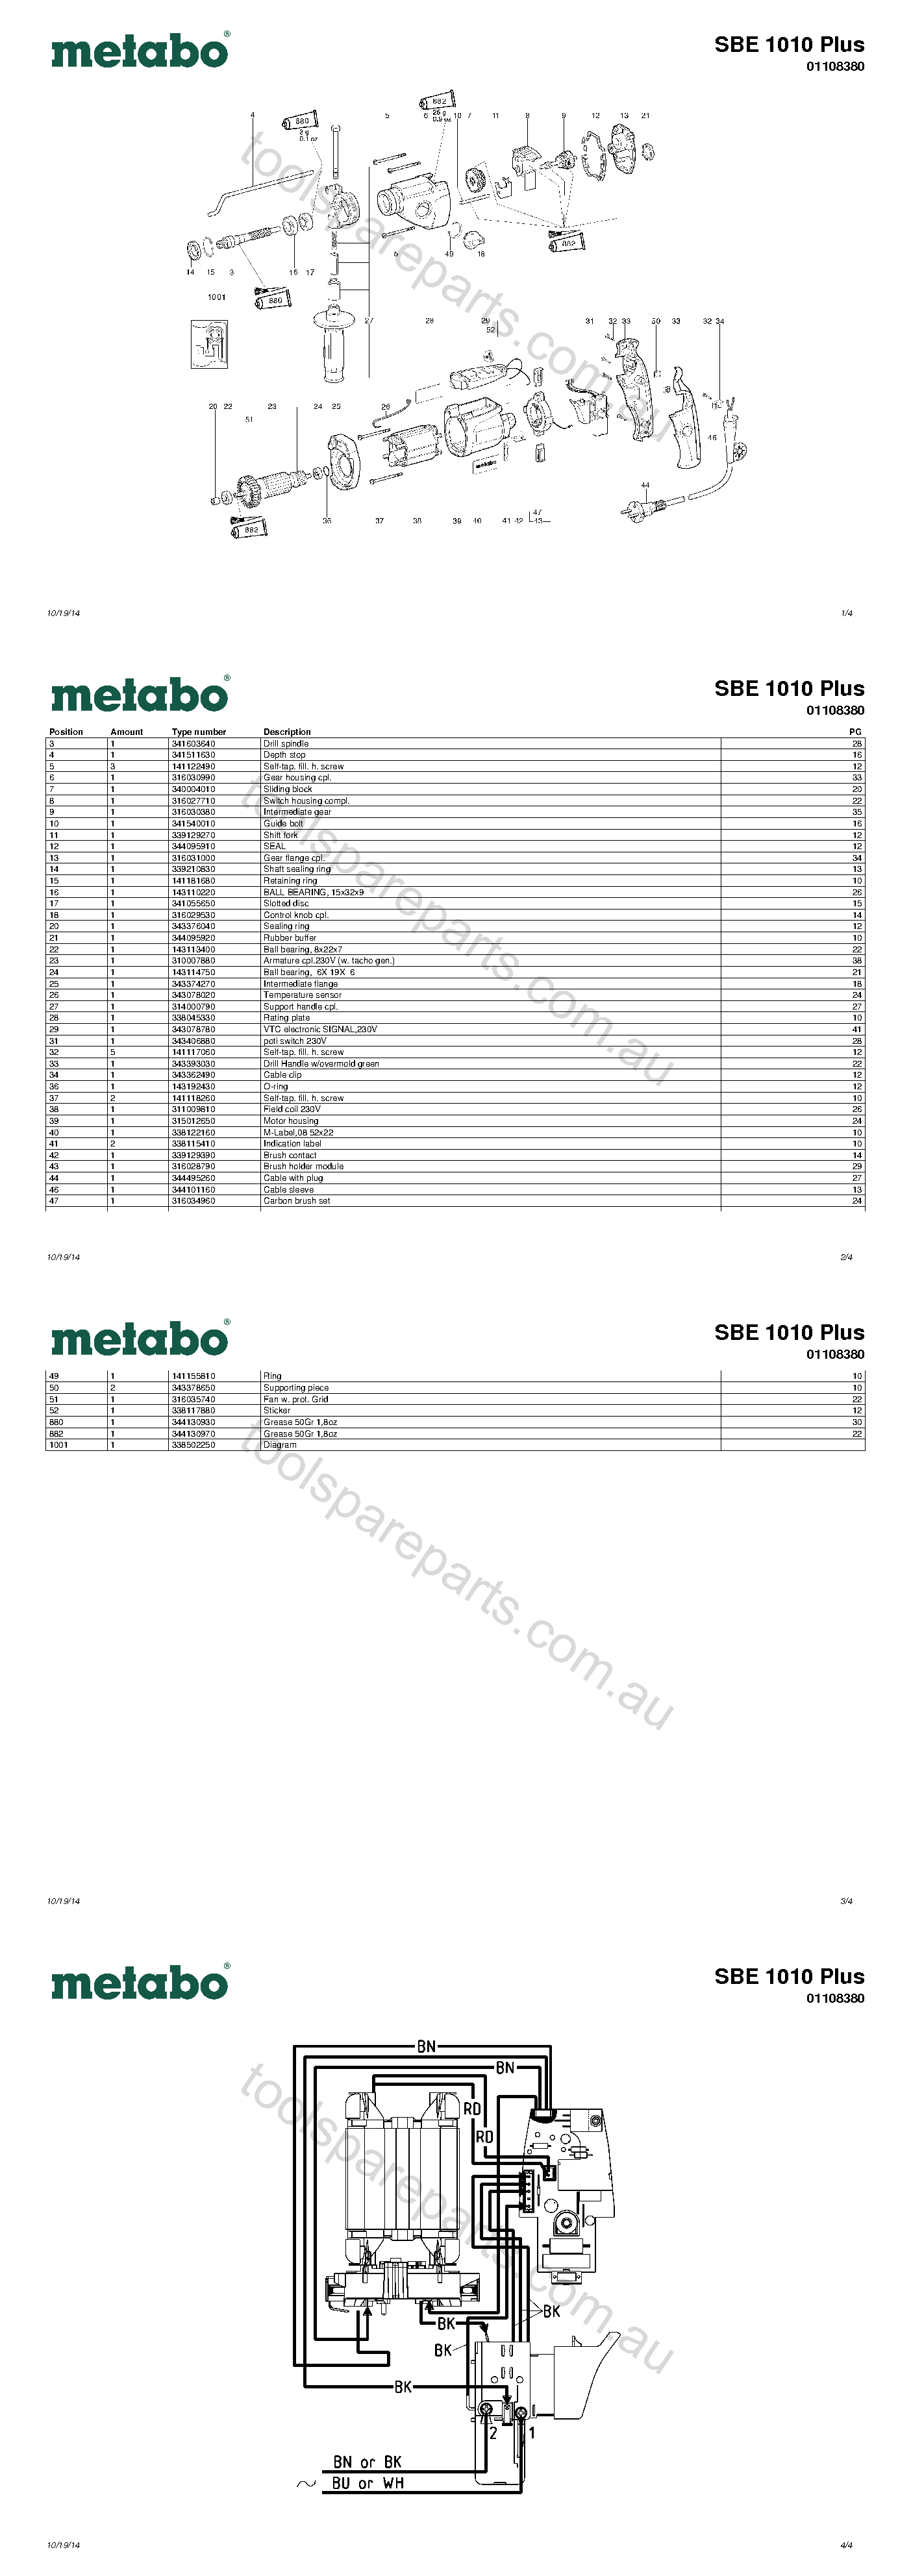 Metabo SBE 1010 Plus 01108380  Diagram 1